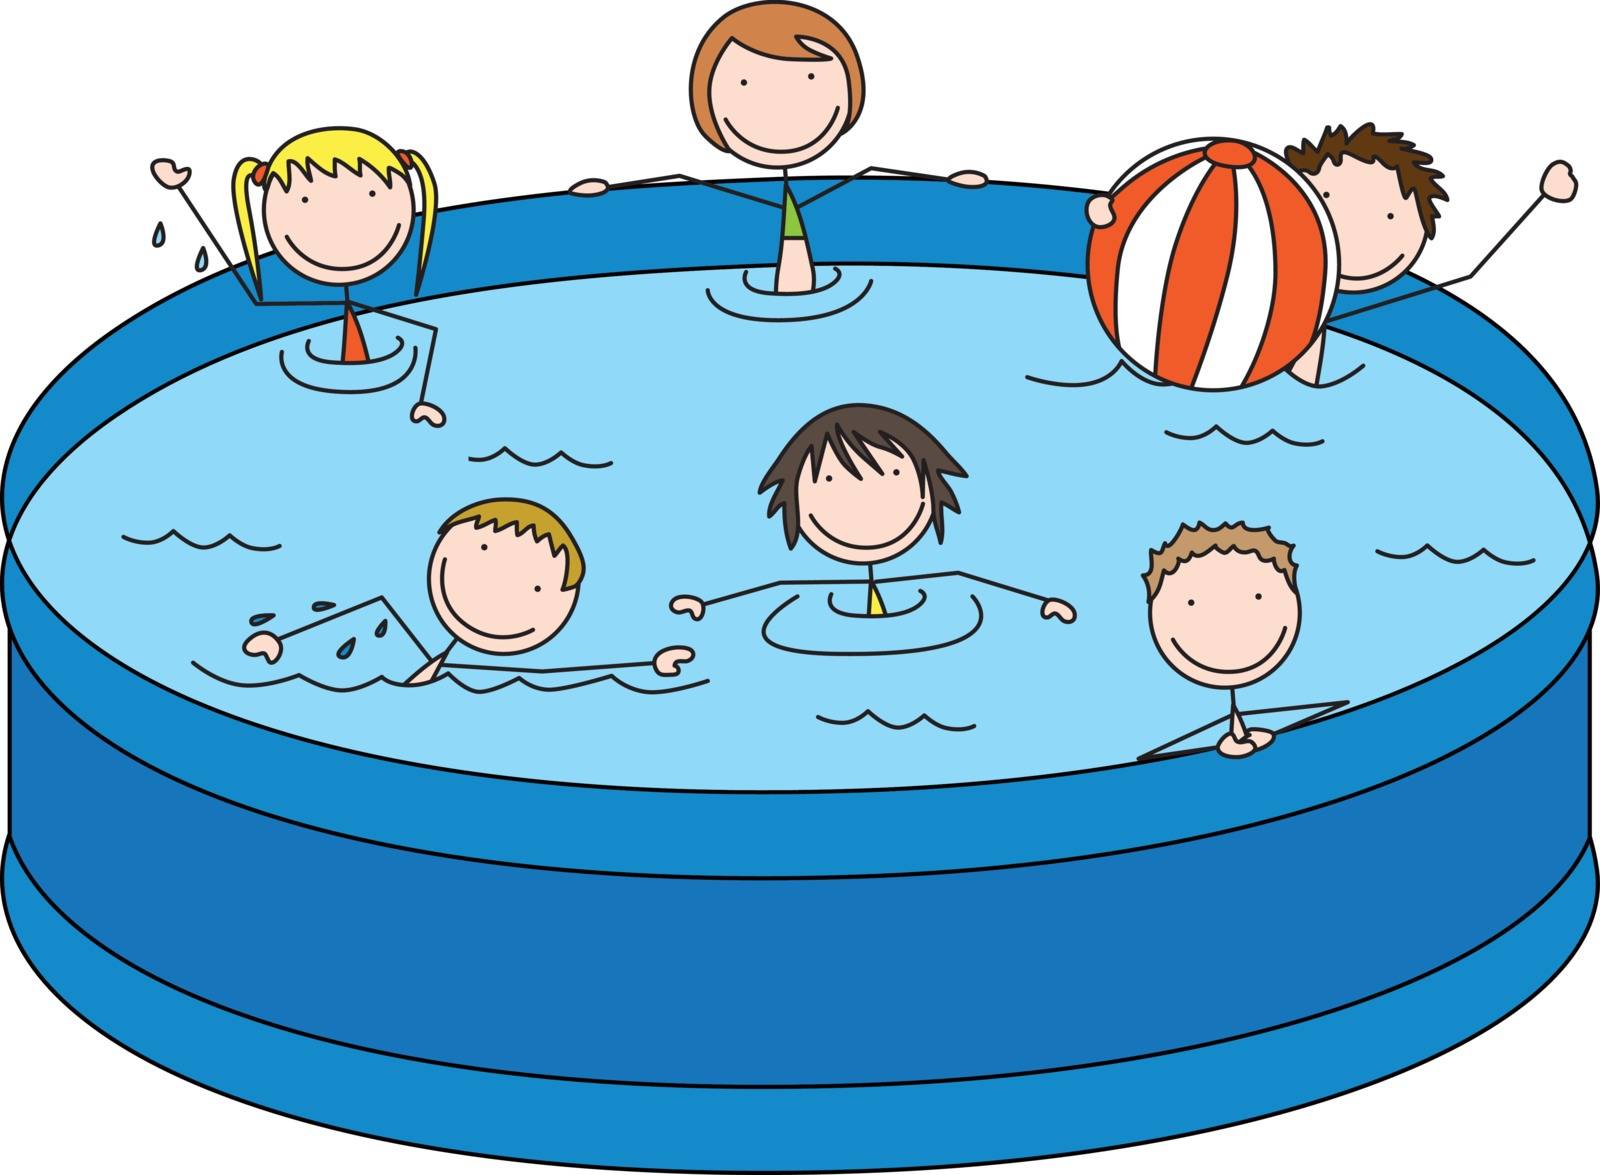 Cartoon illustration of six kids in a pool